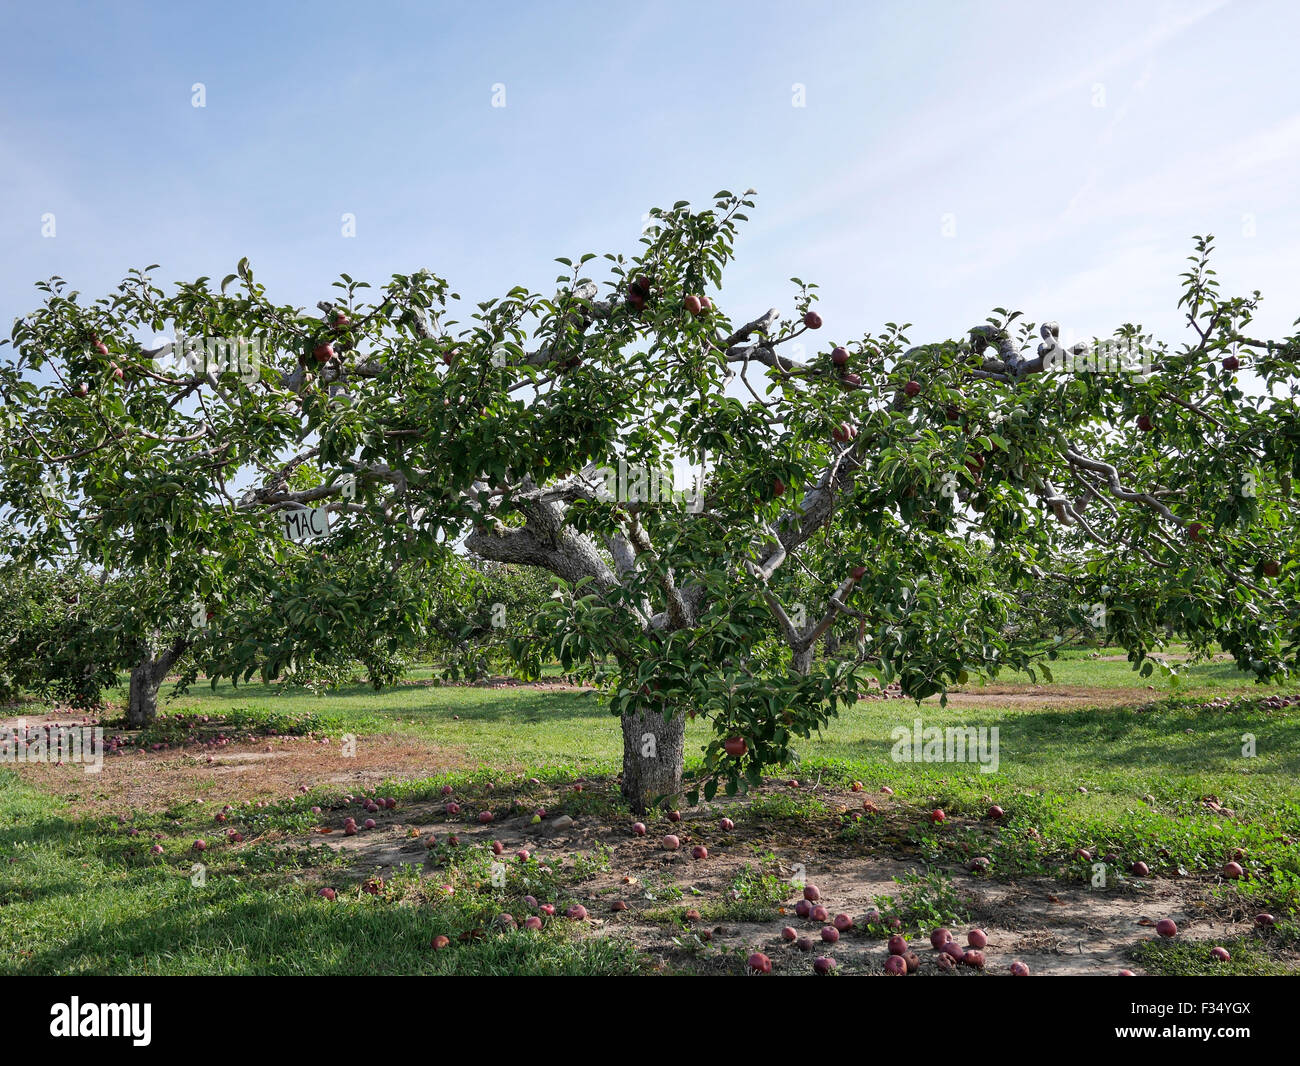 Apple Macintosh albero caduto e mele in un Apple orchard, Ontario, Canada. Foto Stock